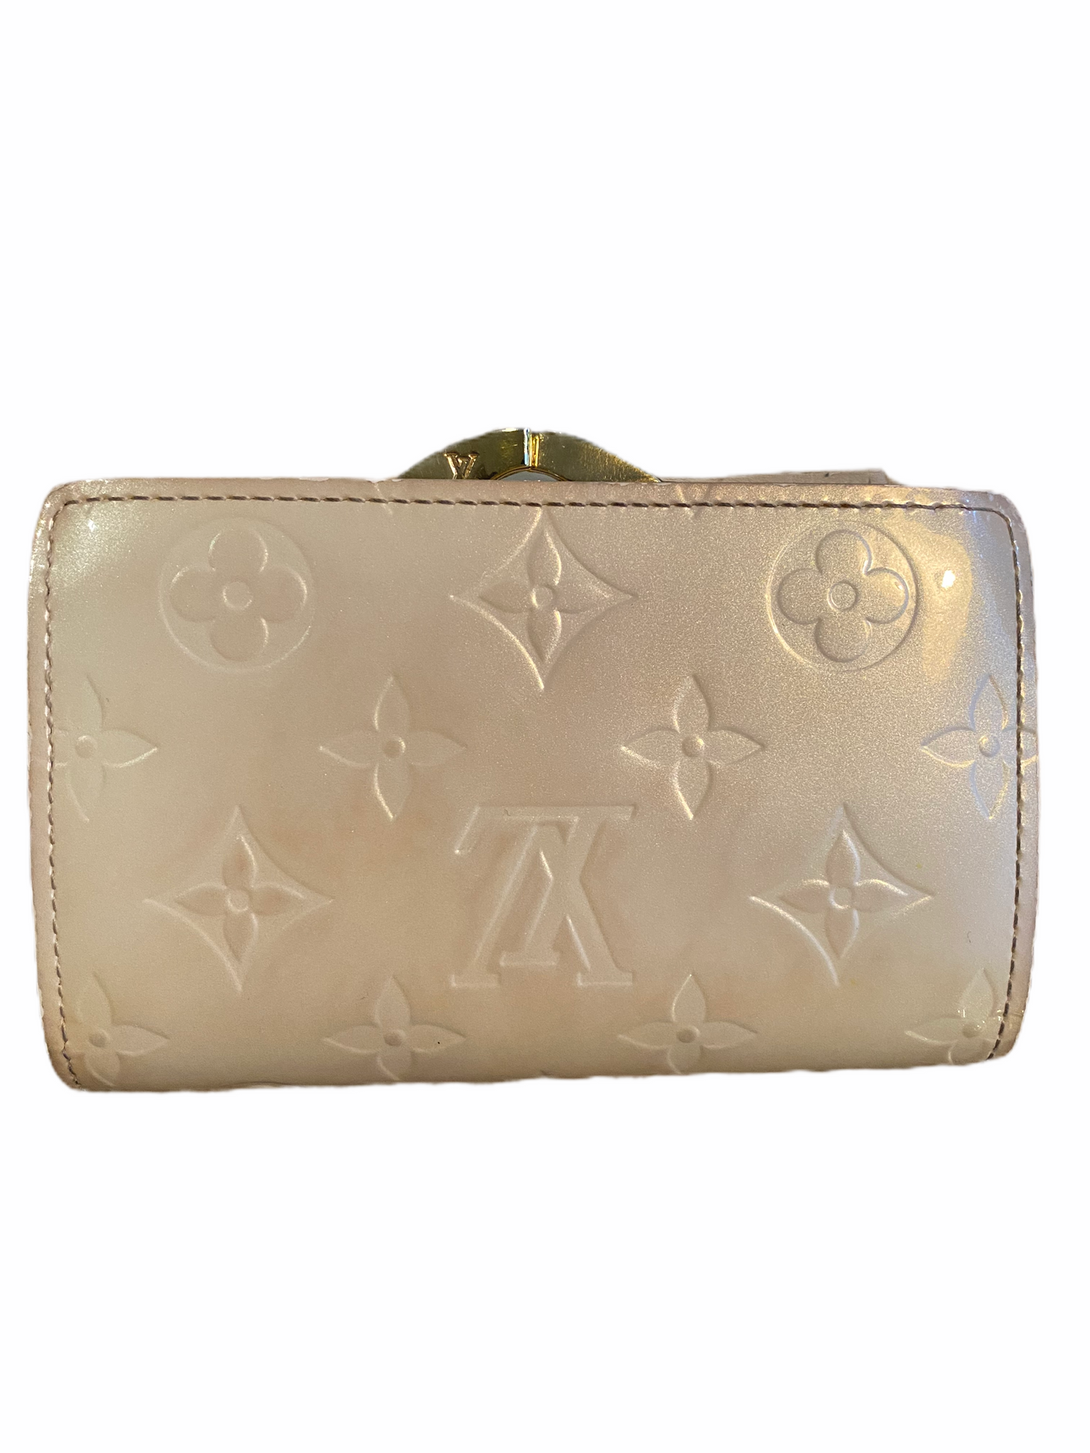 Louis Vuitton Cream Vernis Wallet - As Seen on Instagram - Siopaella Designer Exchange